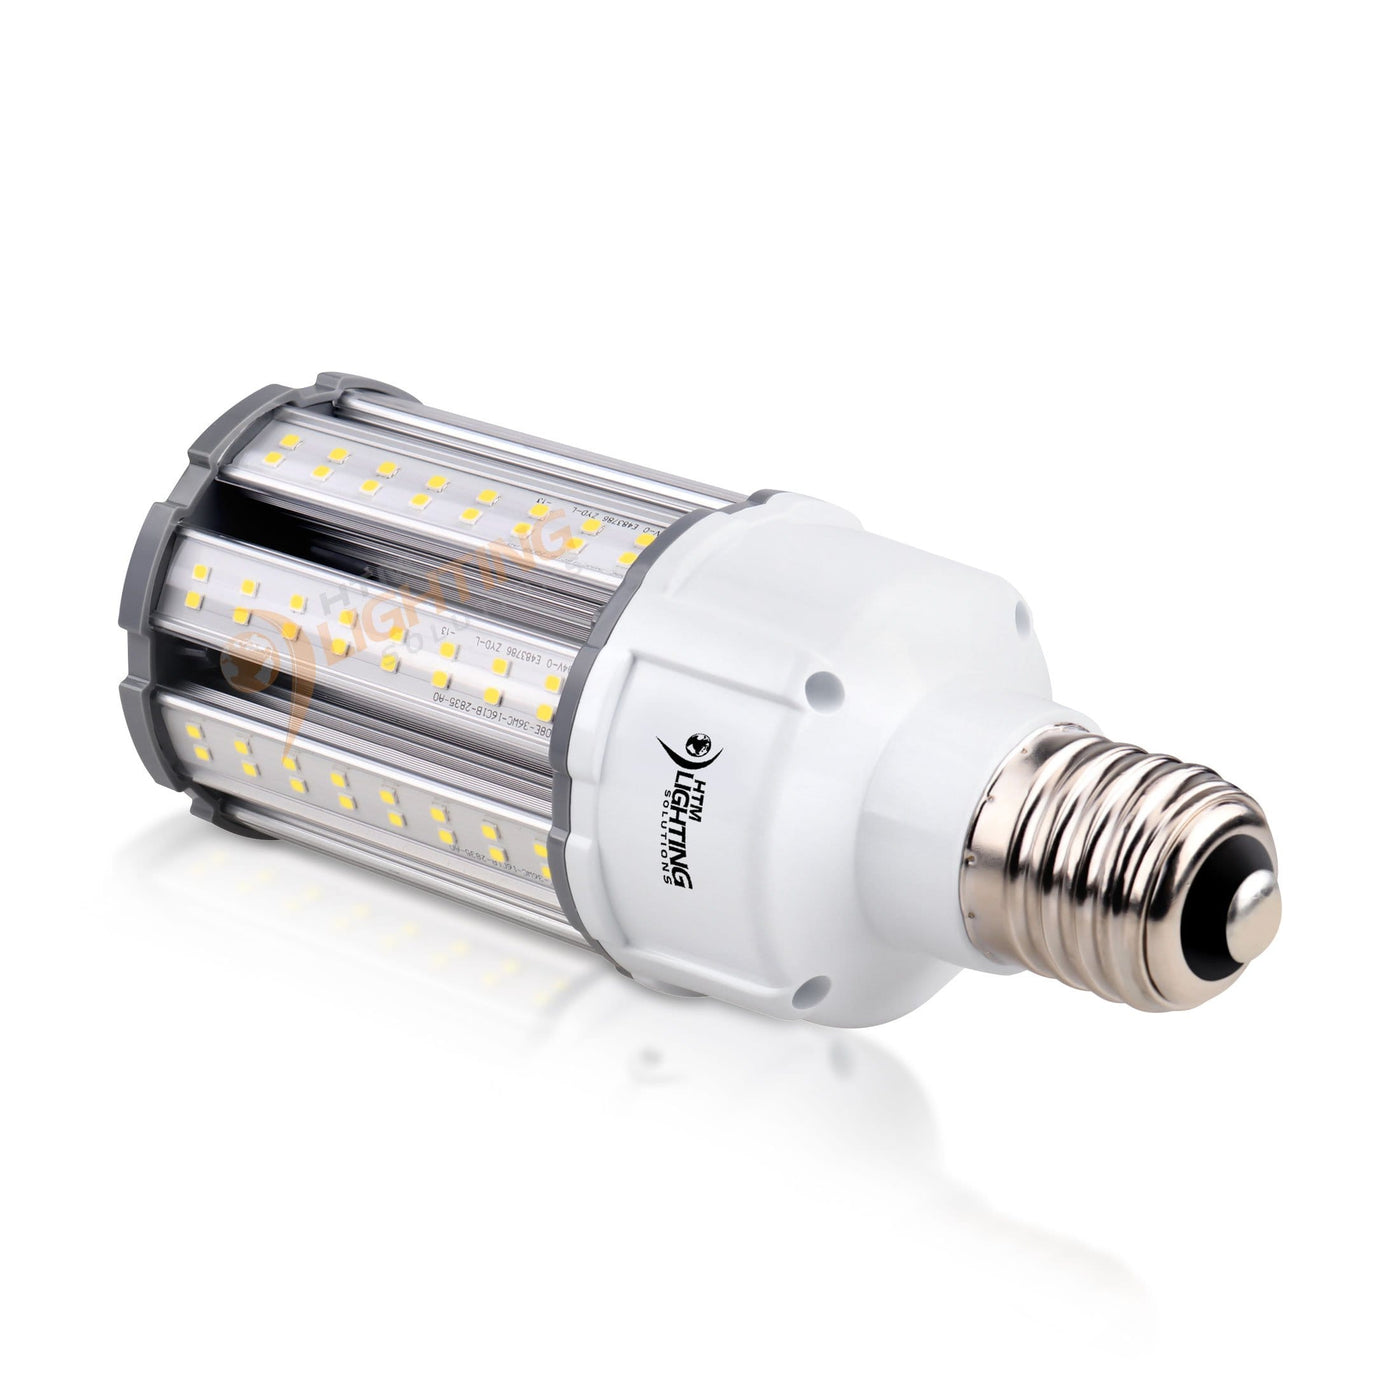 36W LED Corn Light Bulb - 150W MH Equal, Step Dimming